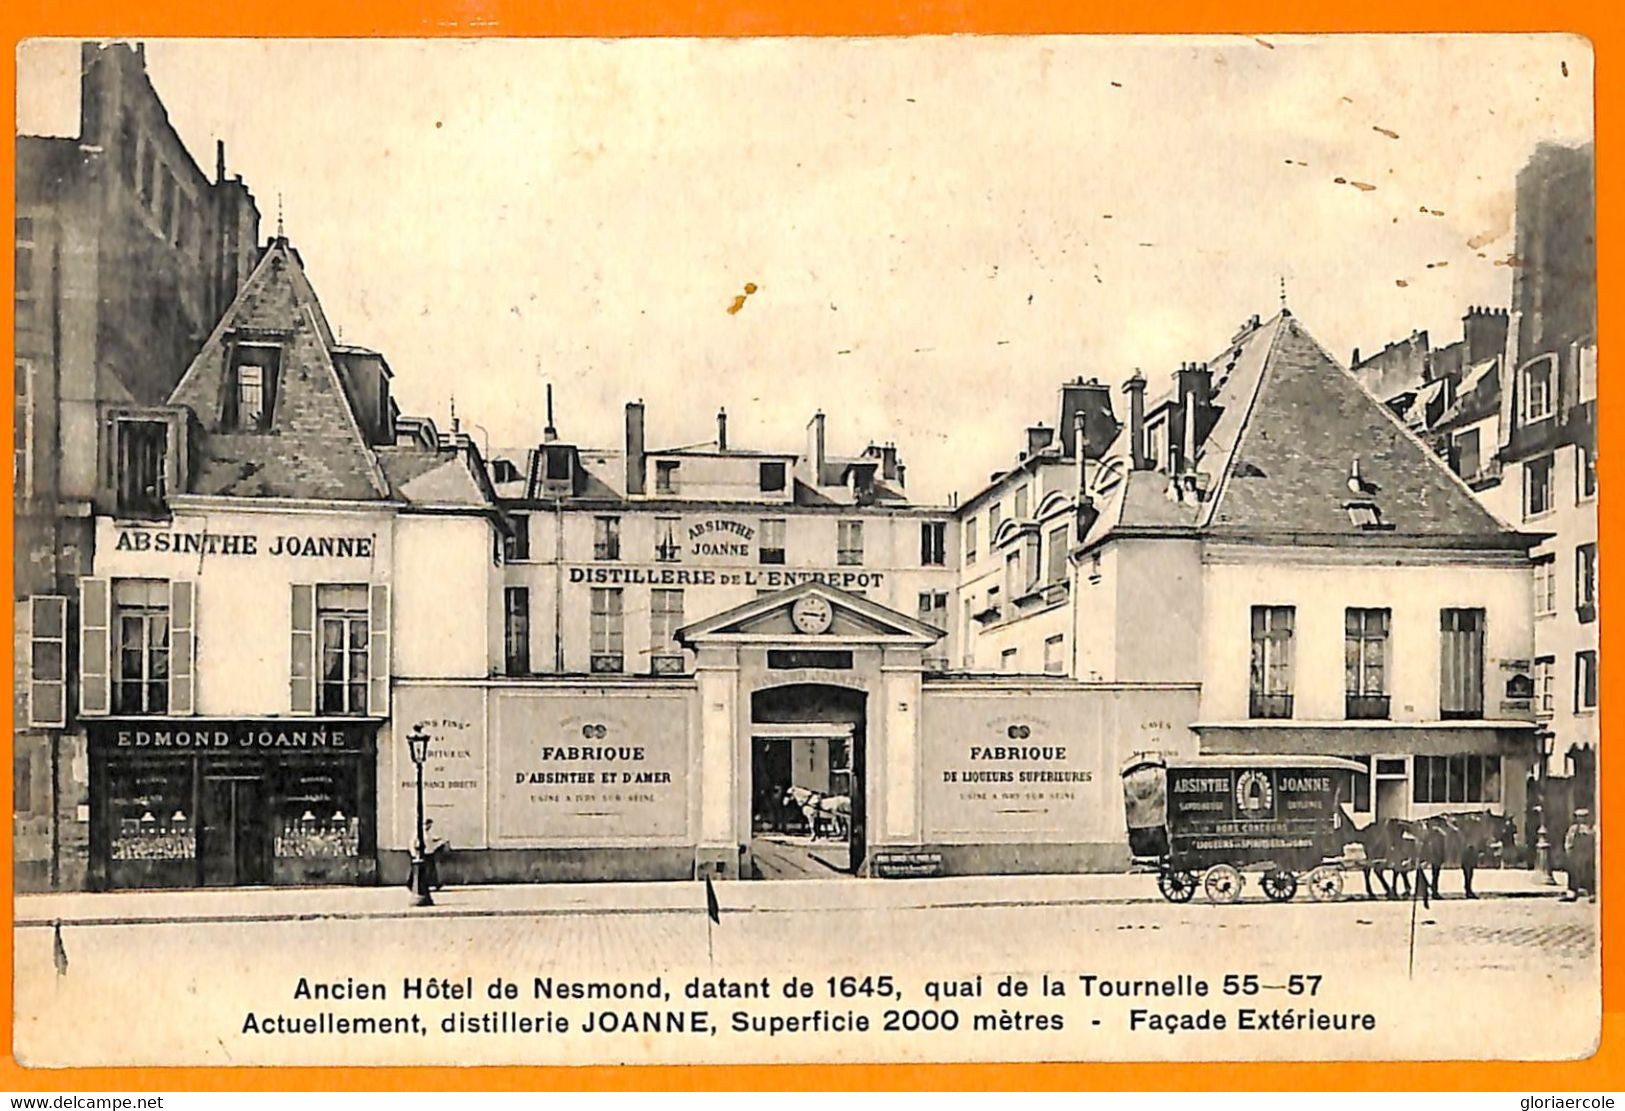 Aa2920 - FRANCE - POSTAL HISTORY - 1924 Olympic Games POSTMARK On Postcard - Summer 1924: Paris